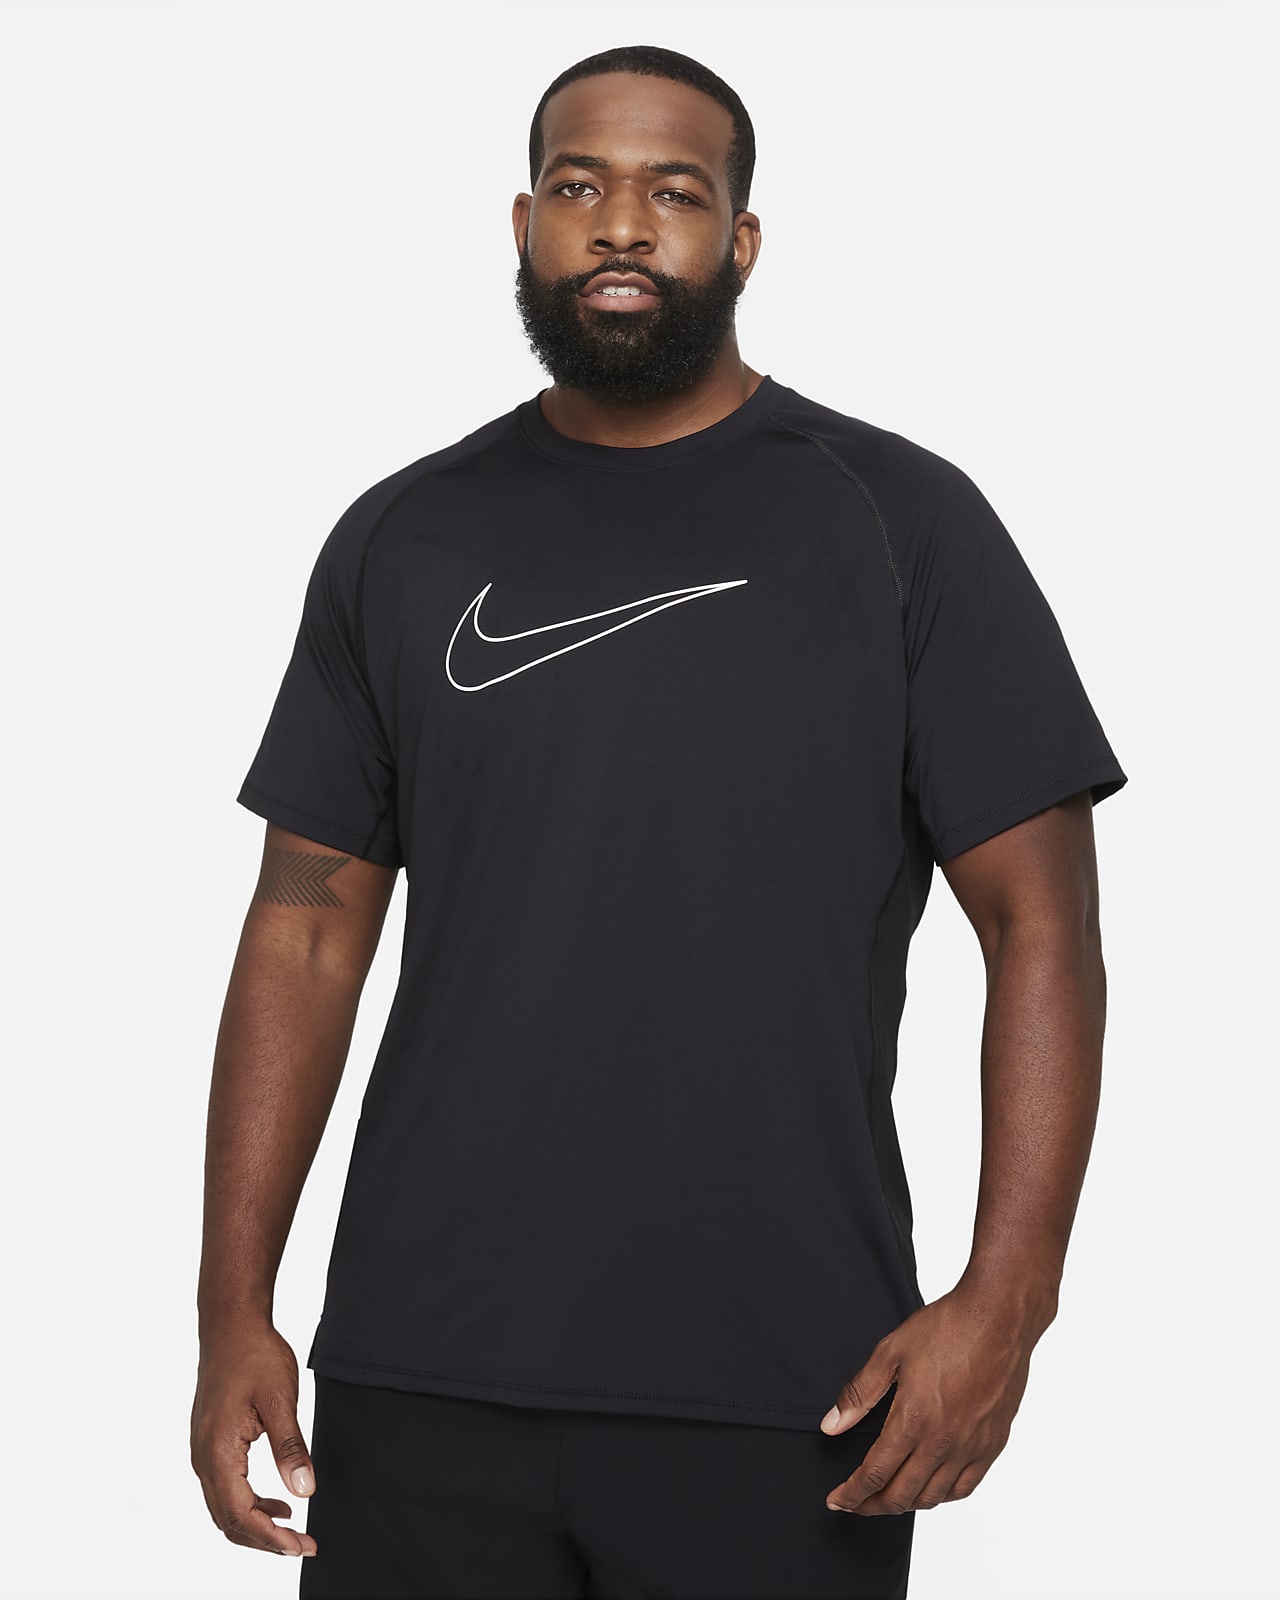 Nike Pro Dri-FIT Men's Slim Fit Short-Sleeve Top.